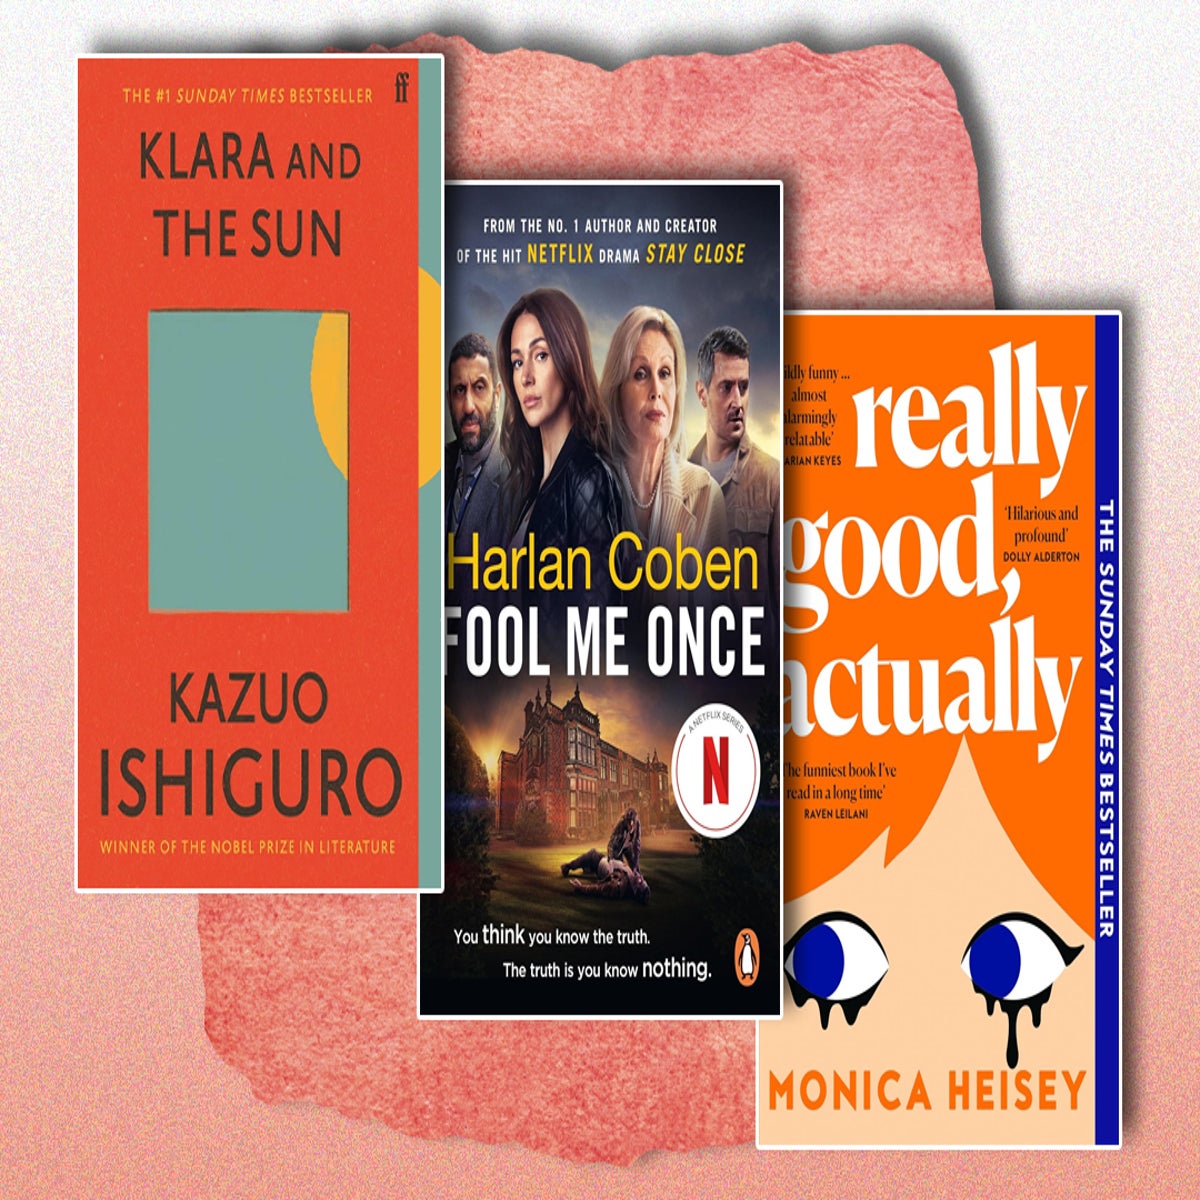 Discover the best free Kindle books - Saga